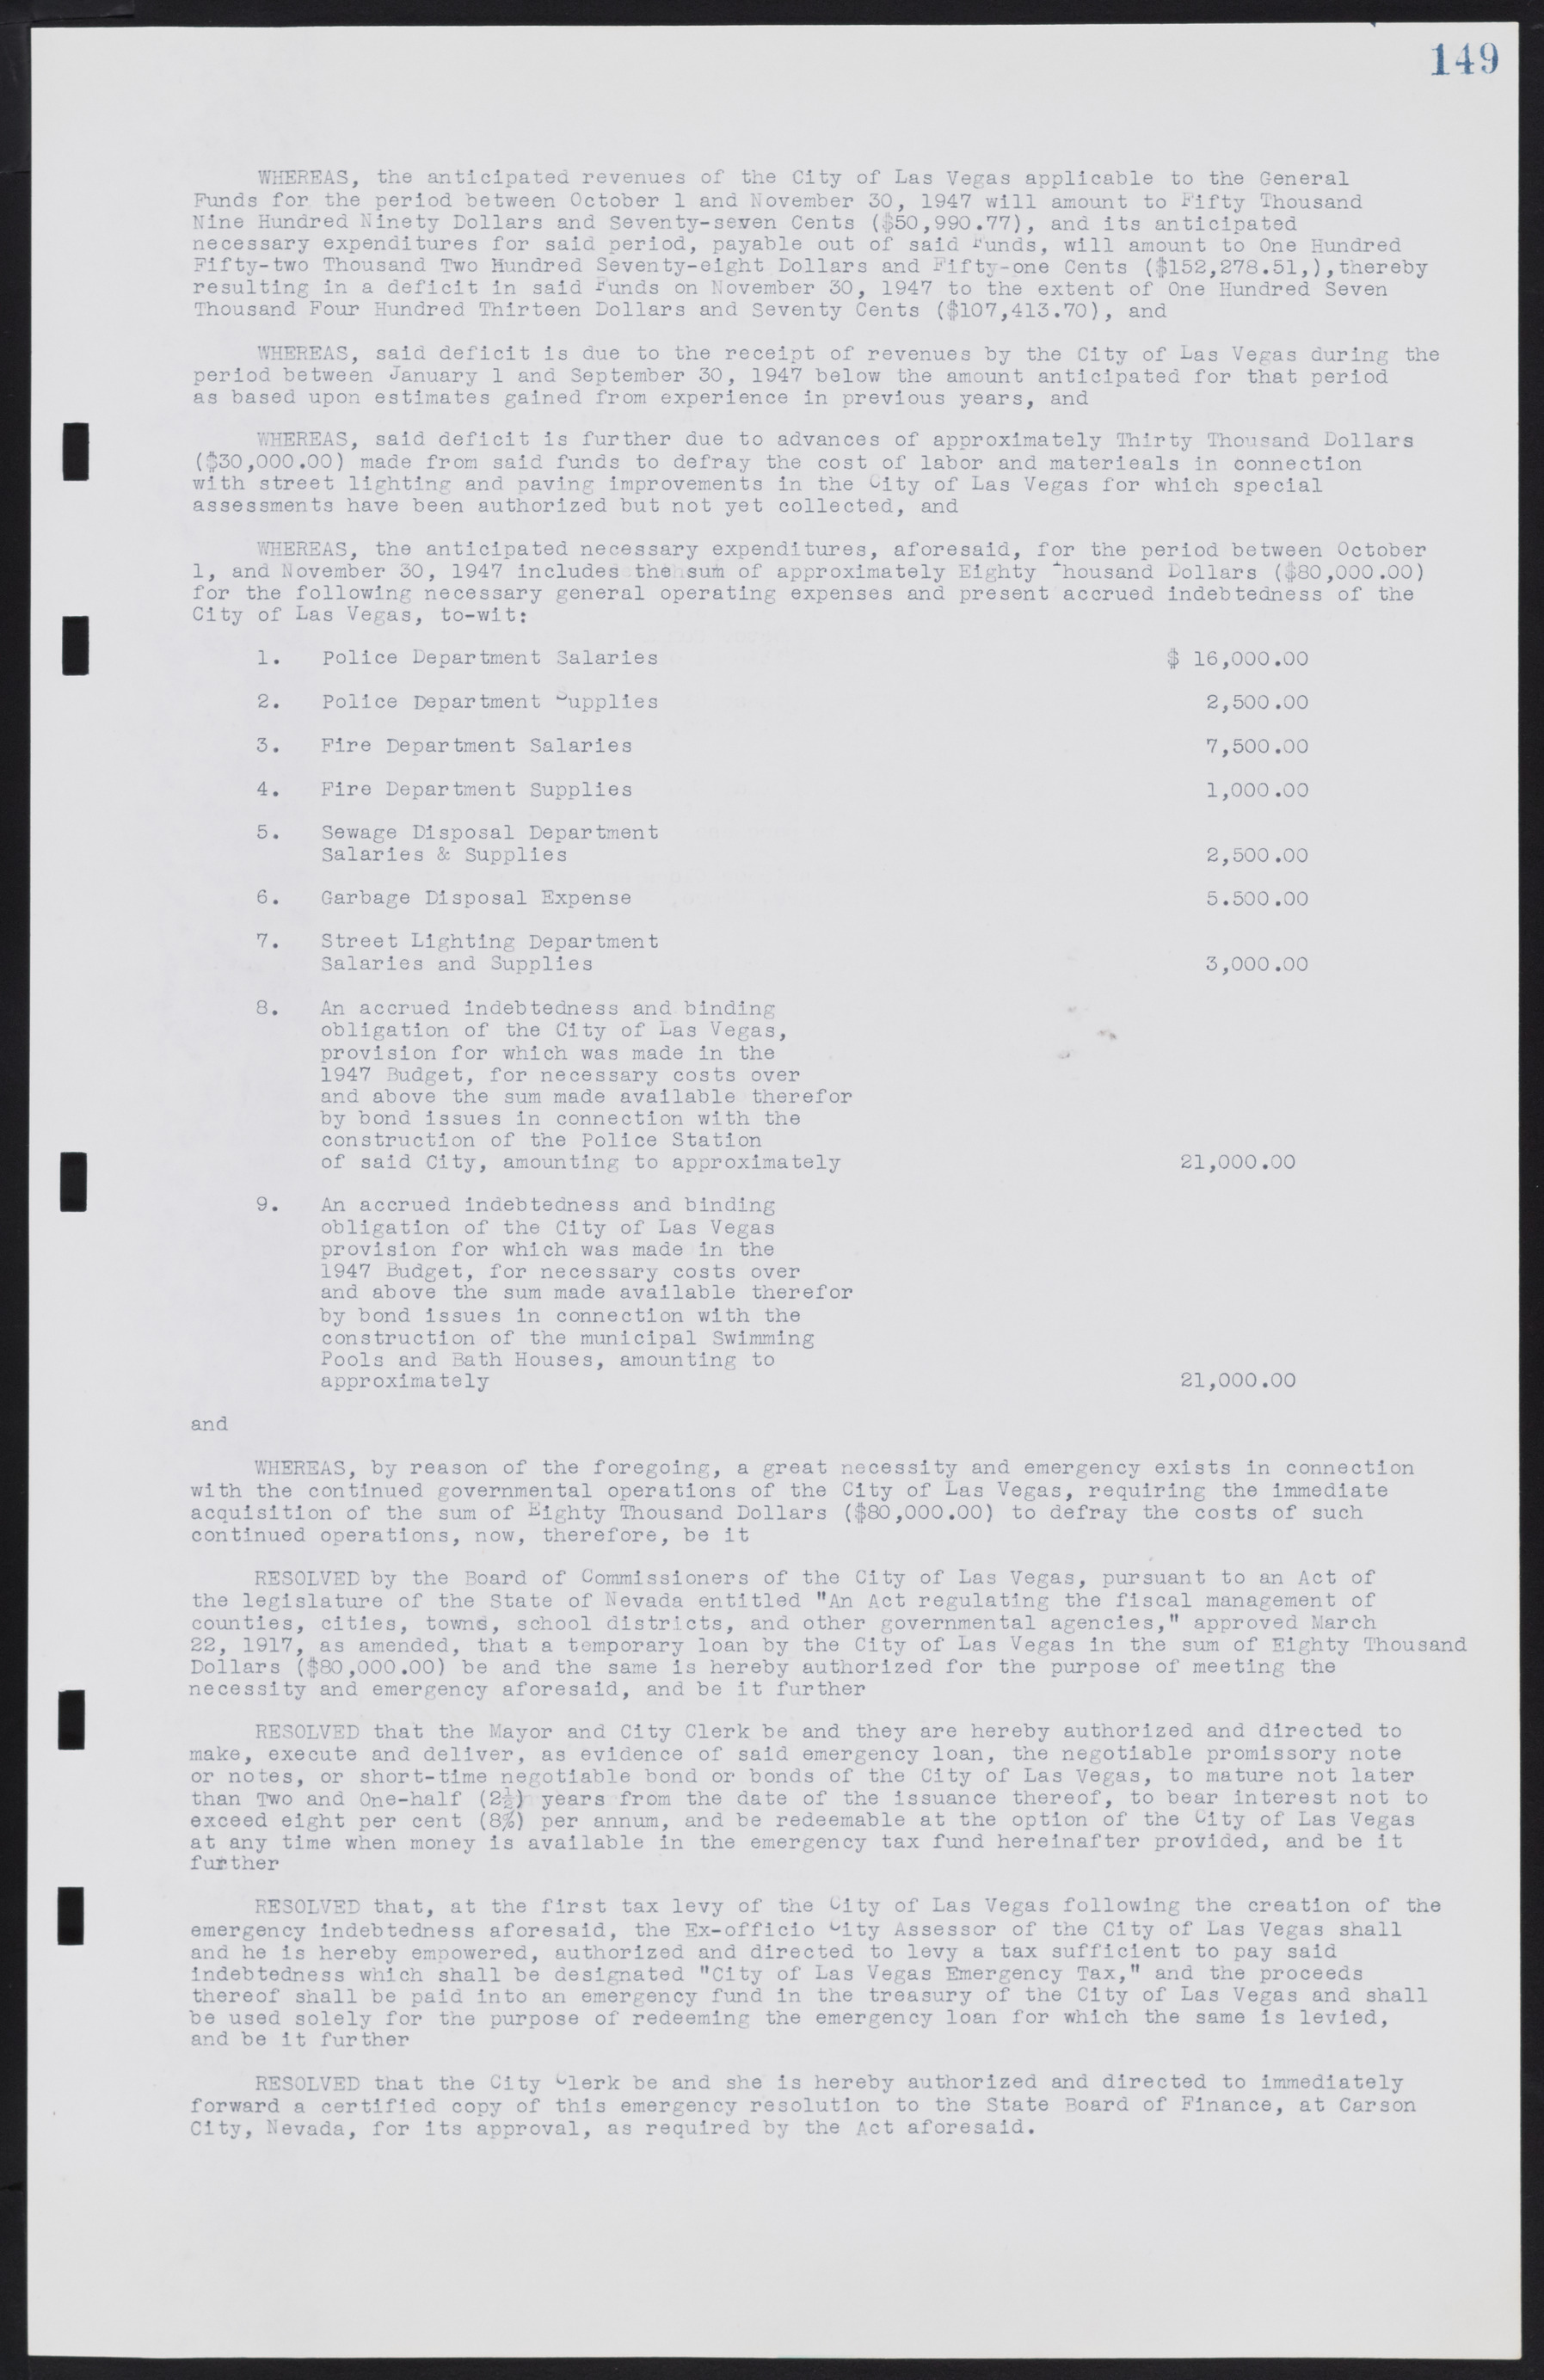 Las Vegas City Commission Minutes, January 7, 1947 to October 26, 1949, lvc000006-168